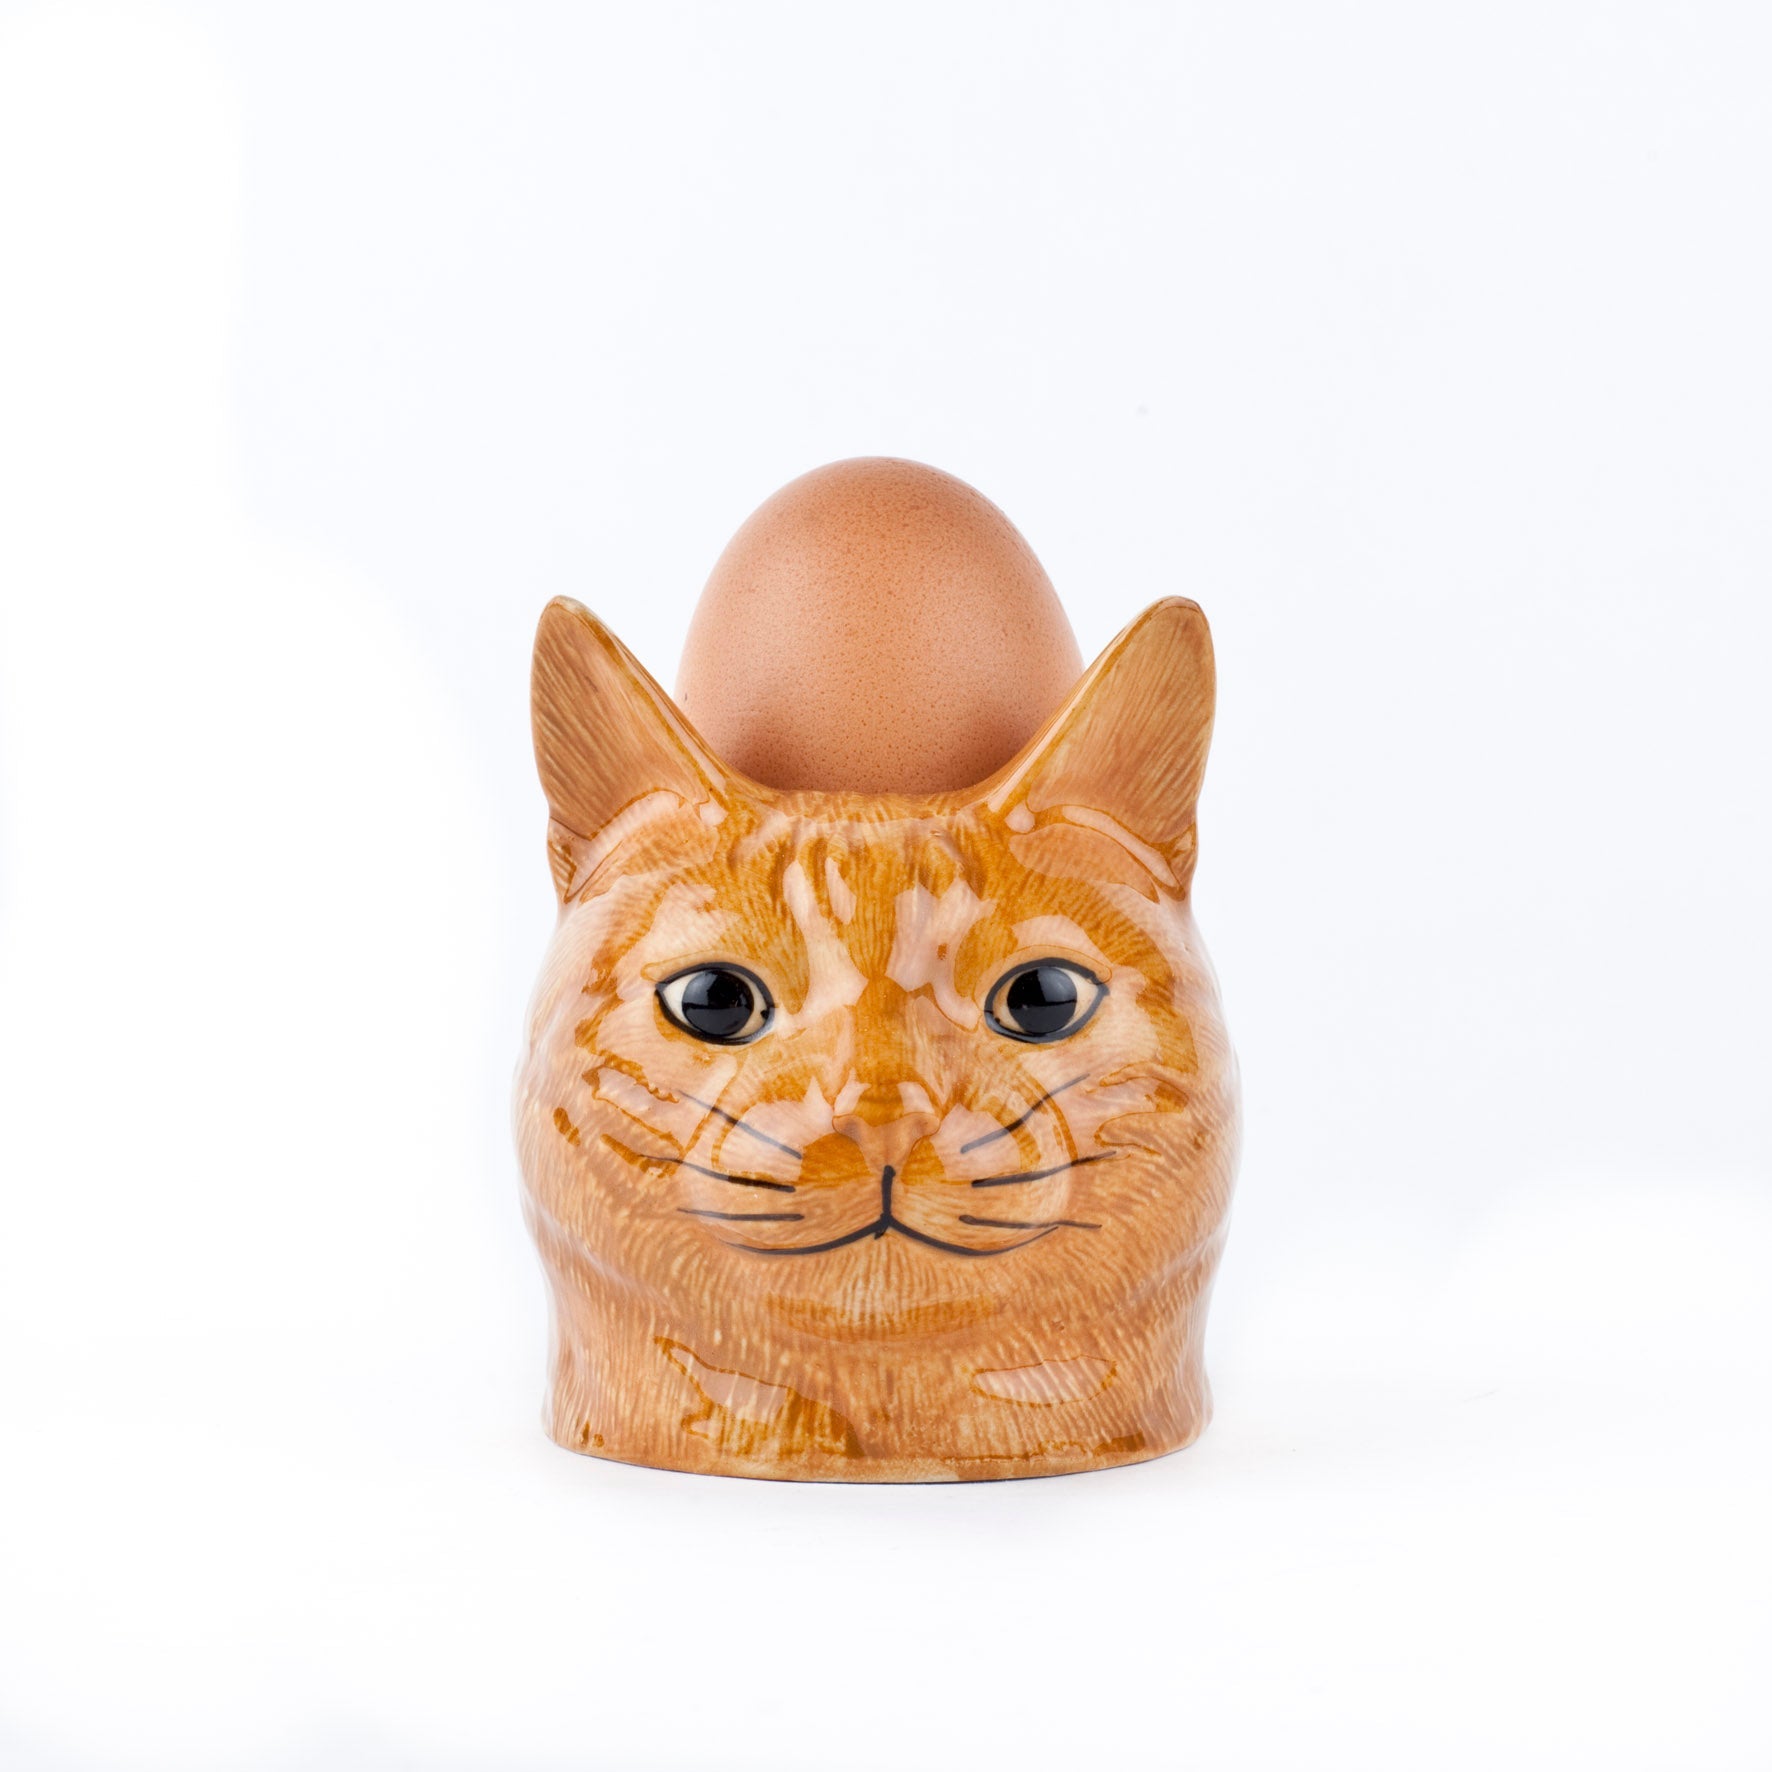 Vincent the cat face egg cup